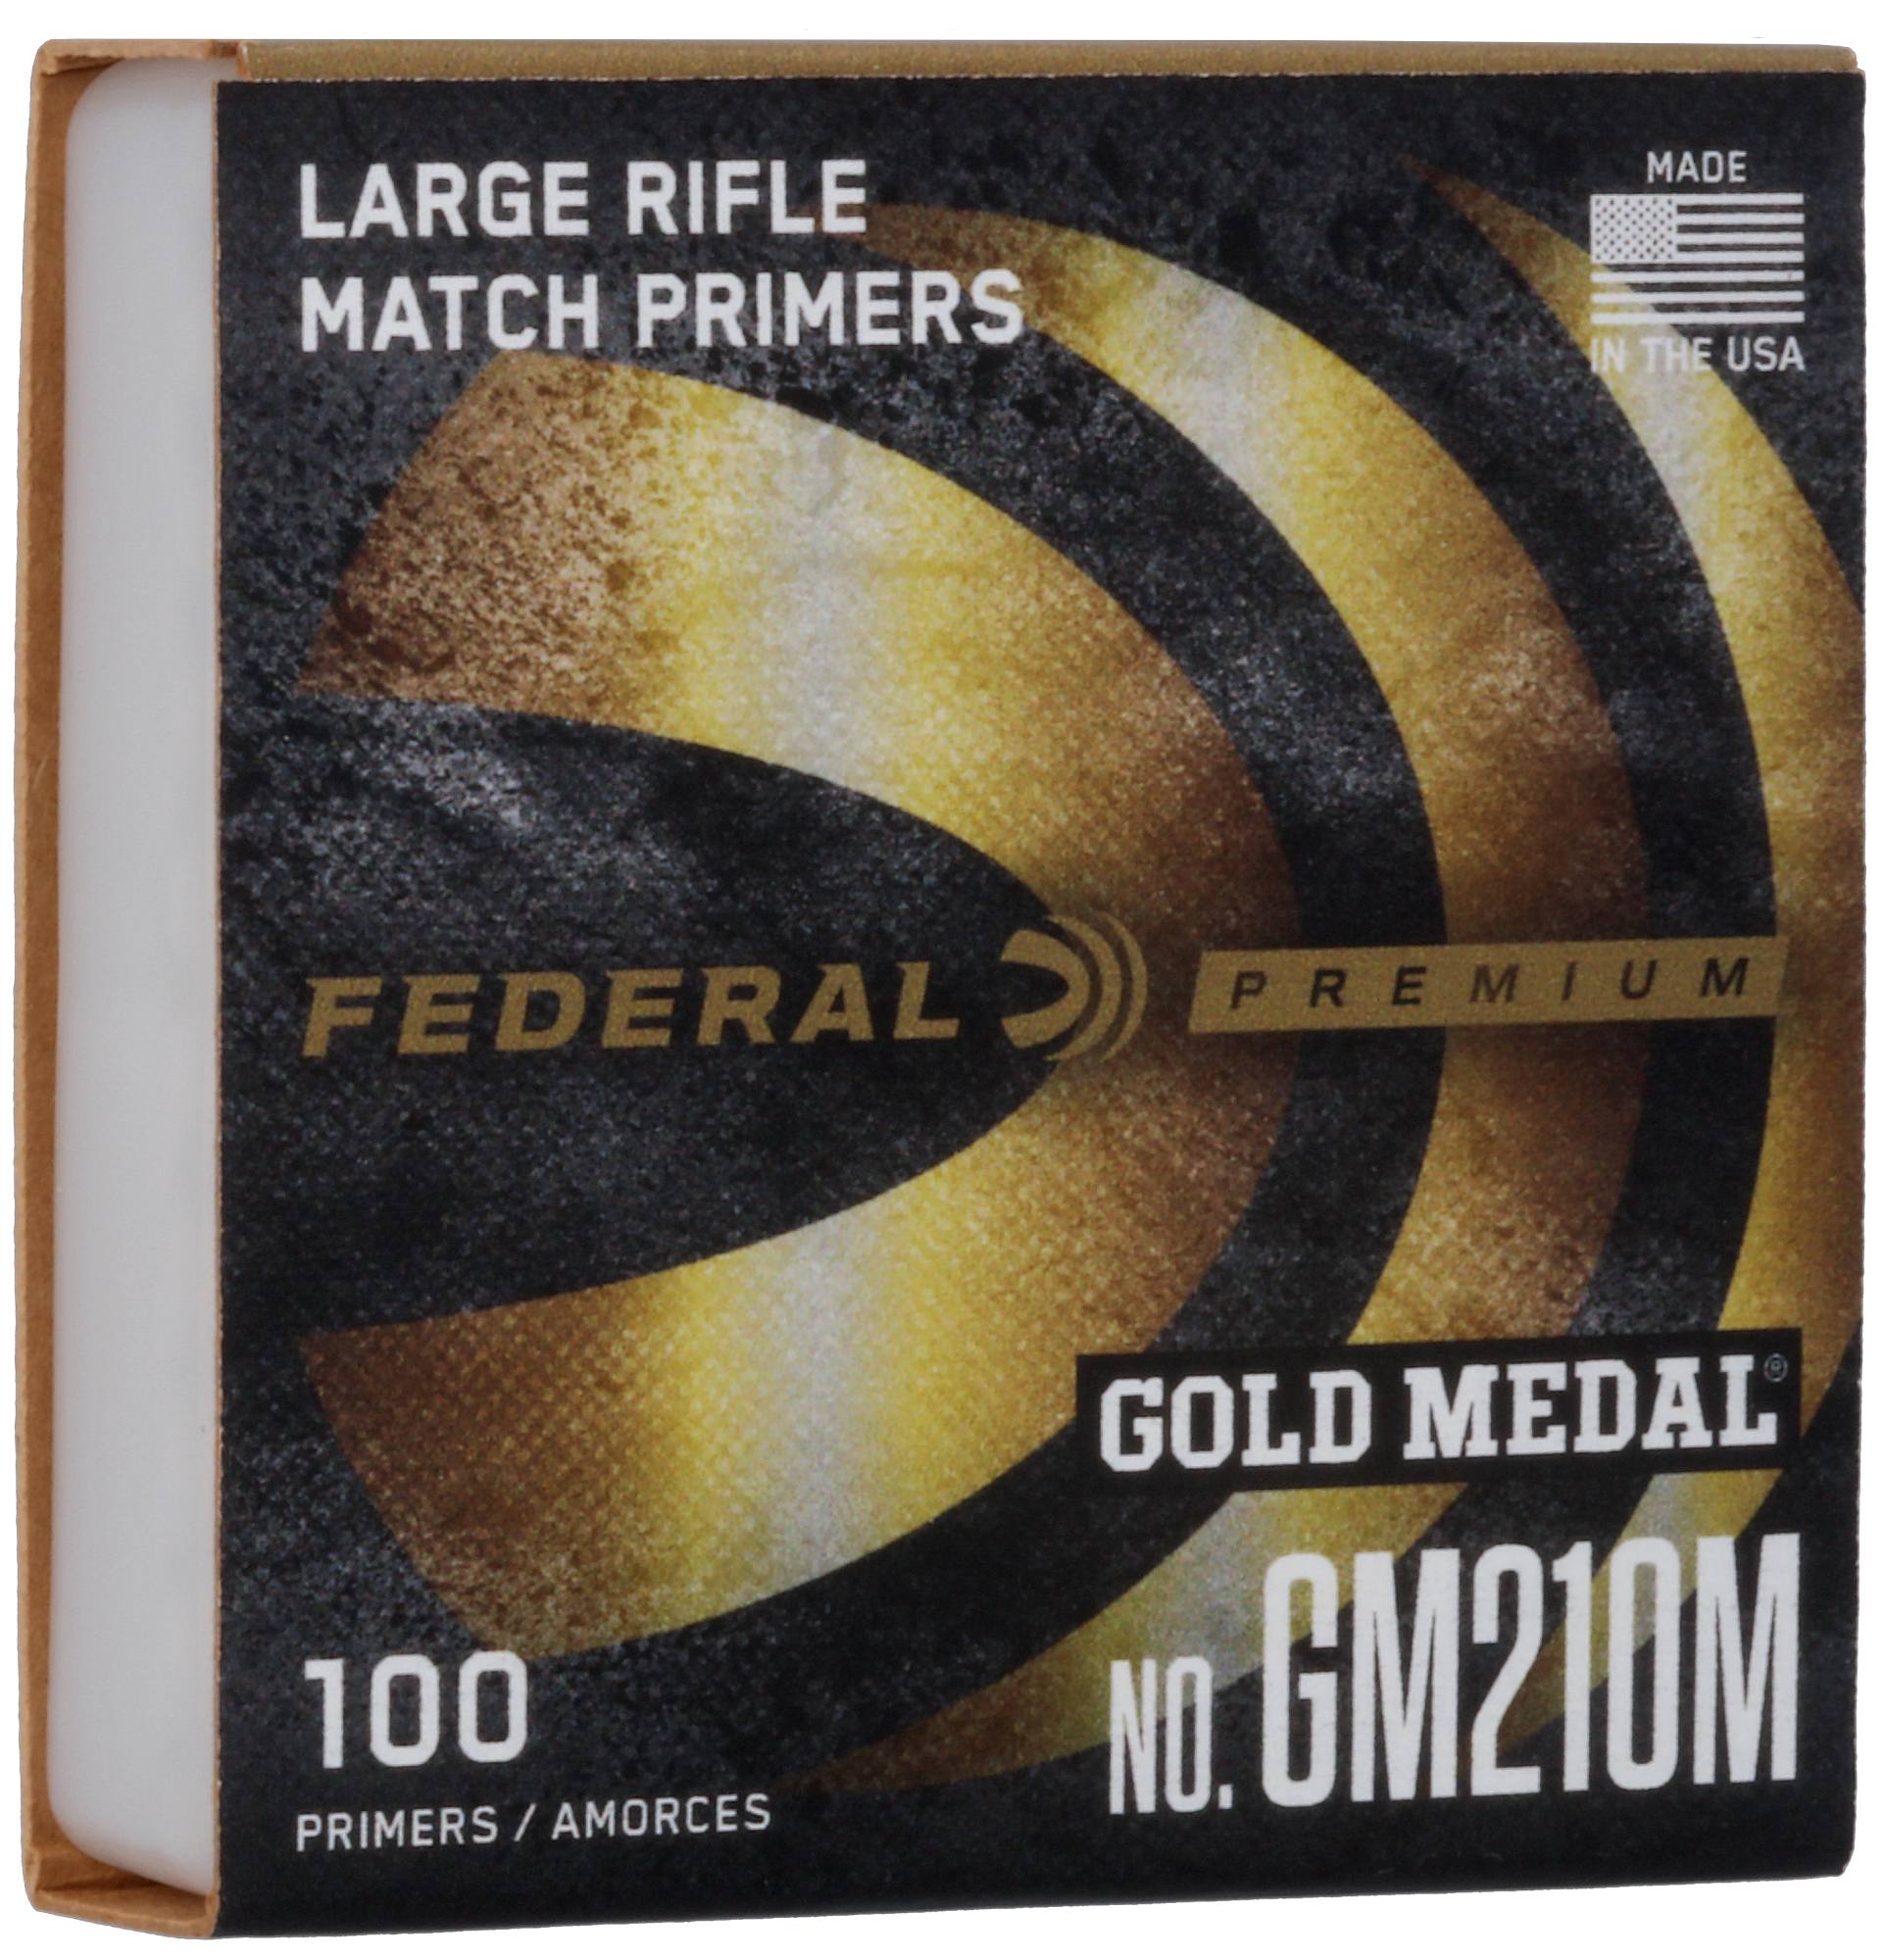 Buy Gold Medal Centerfire Primer for USD 7.99 | Federal Ammunition